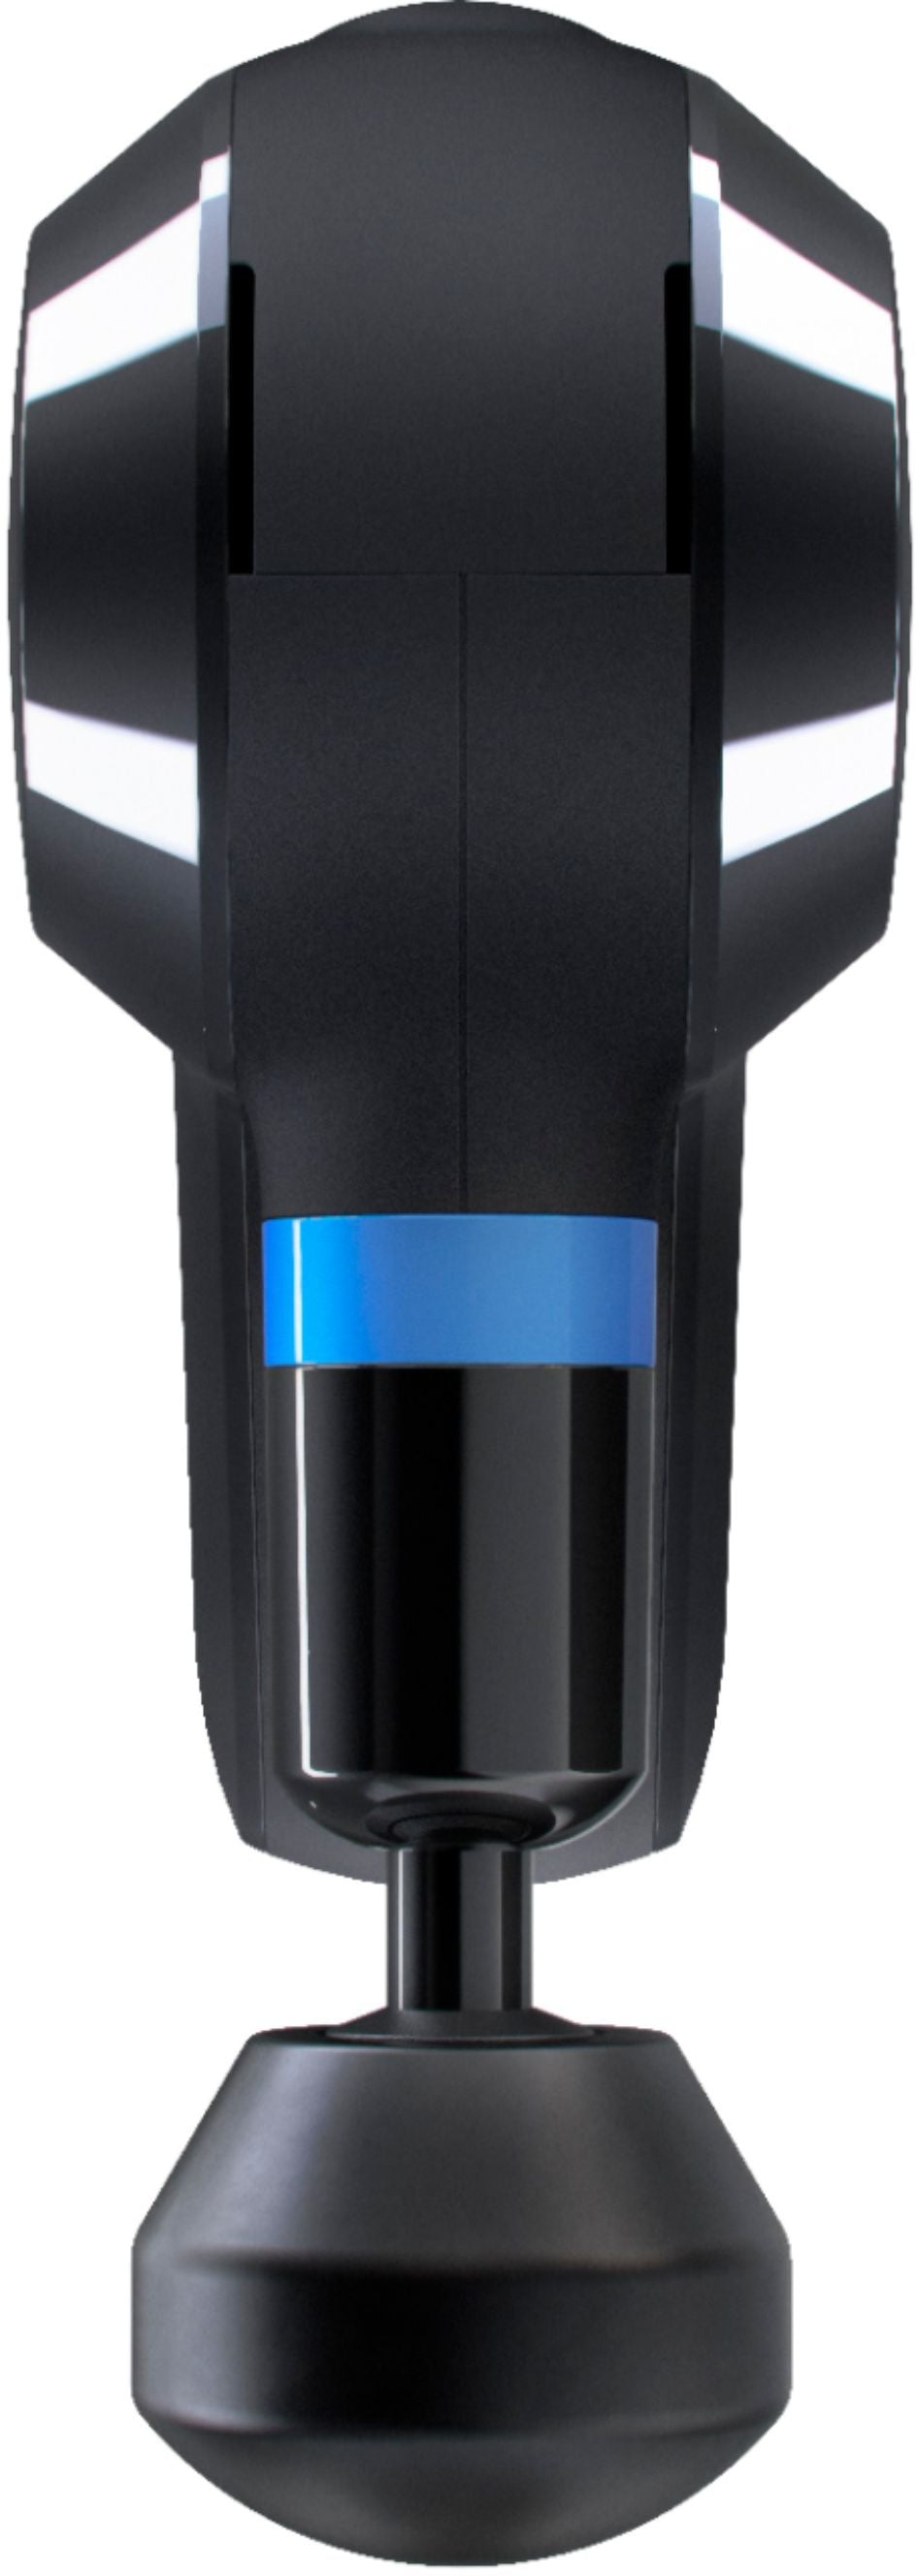 Therabody - Theragun Elite Handheld Percussive Massage Device (Latest Model) with Travel Case - Black_3